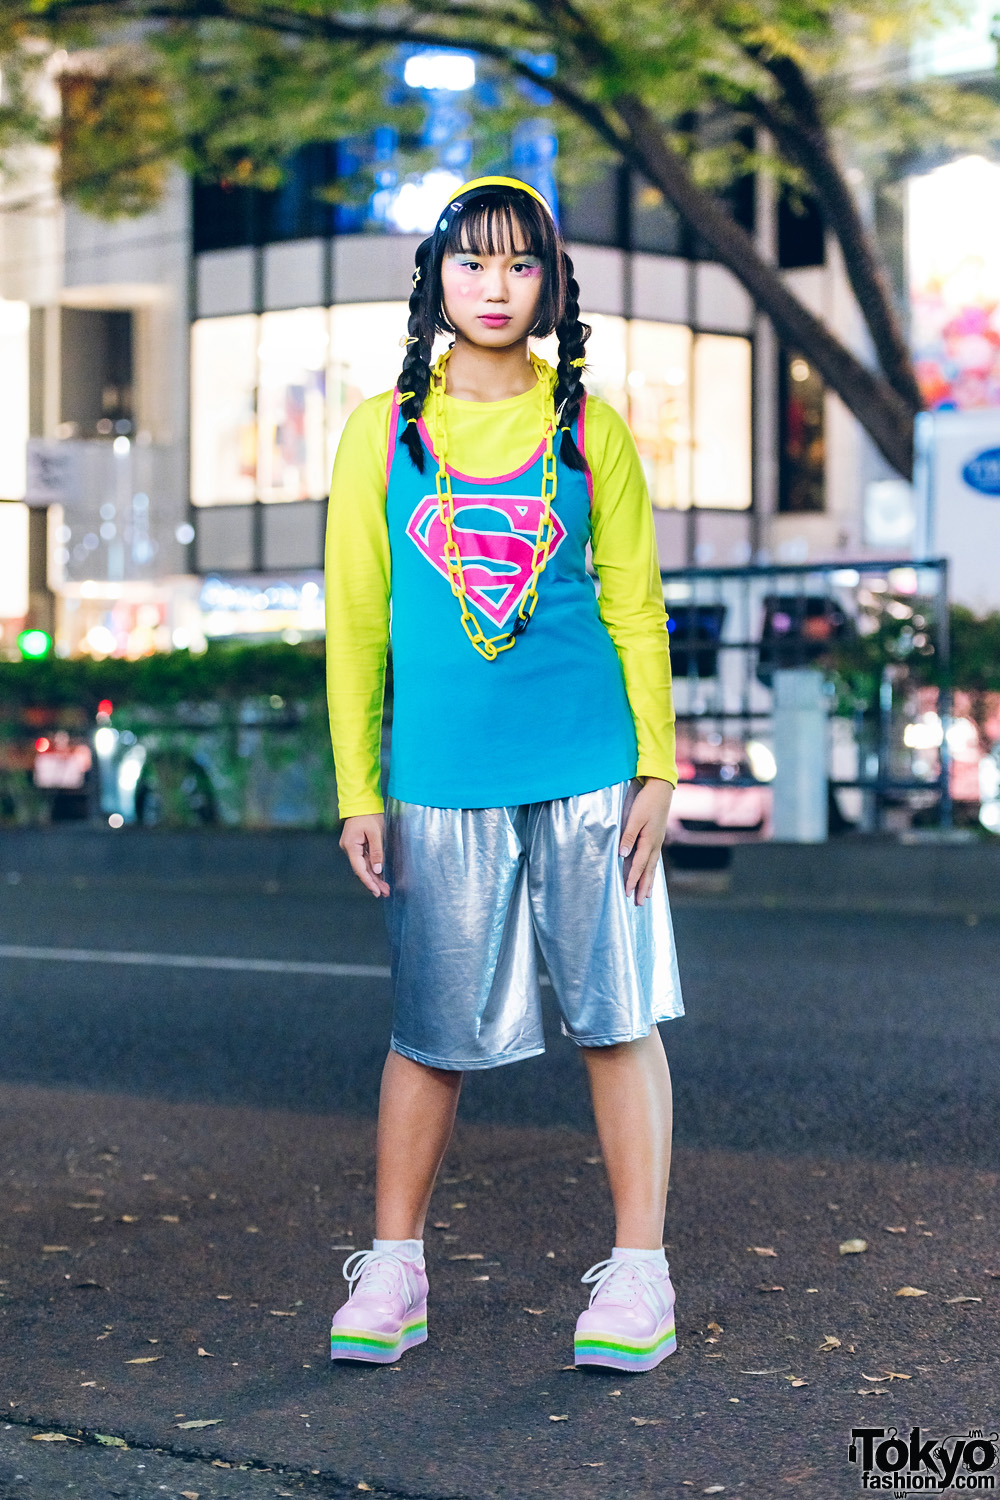 Harajuku Colorful Street Style in Harajuku w/ Twin Braids, Nike Superman Tank Top, ACDC Rag Metallic Shorts, Sevens & WC Rainbow Sneakers